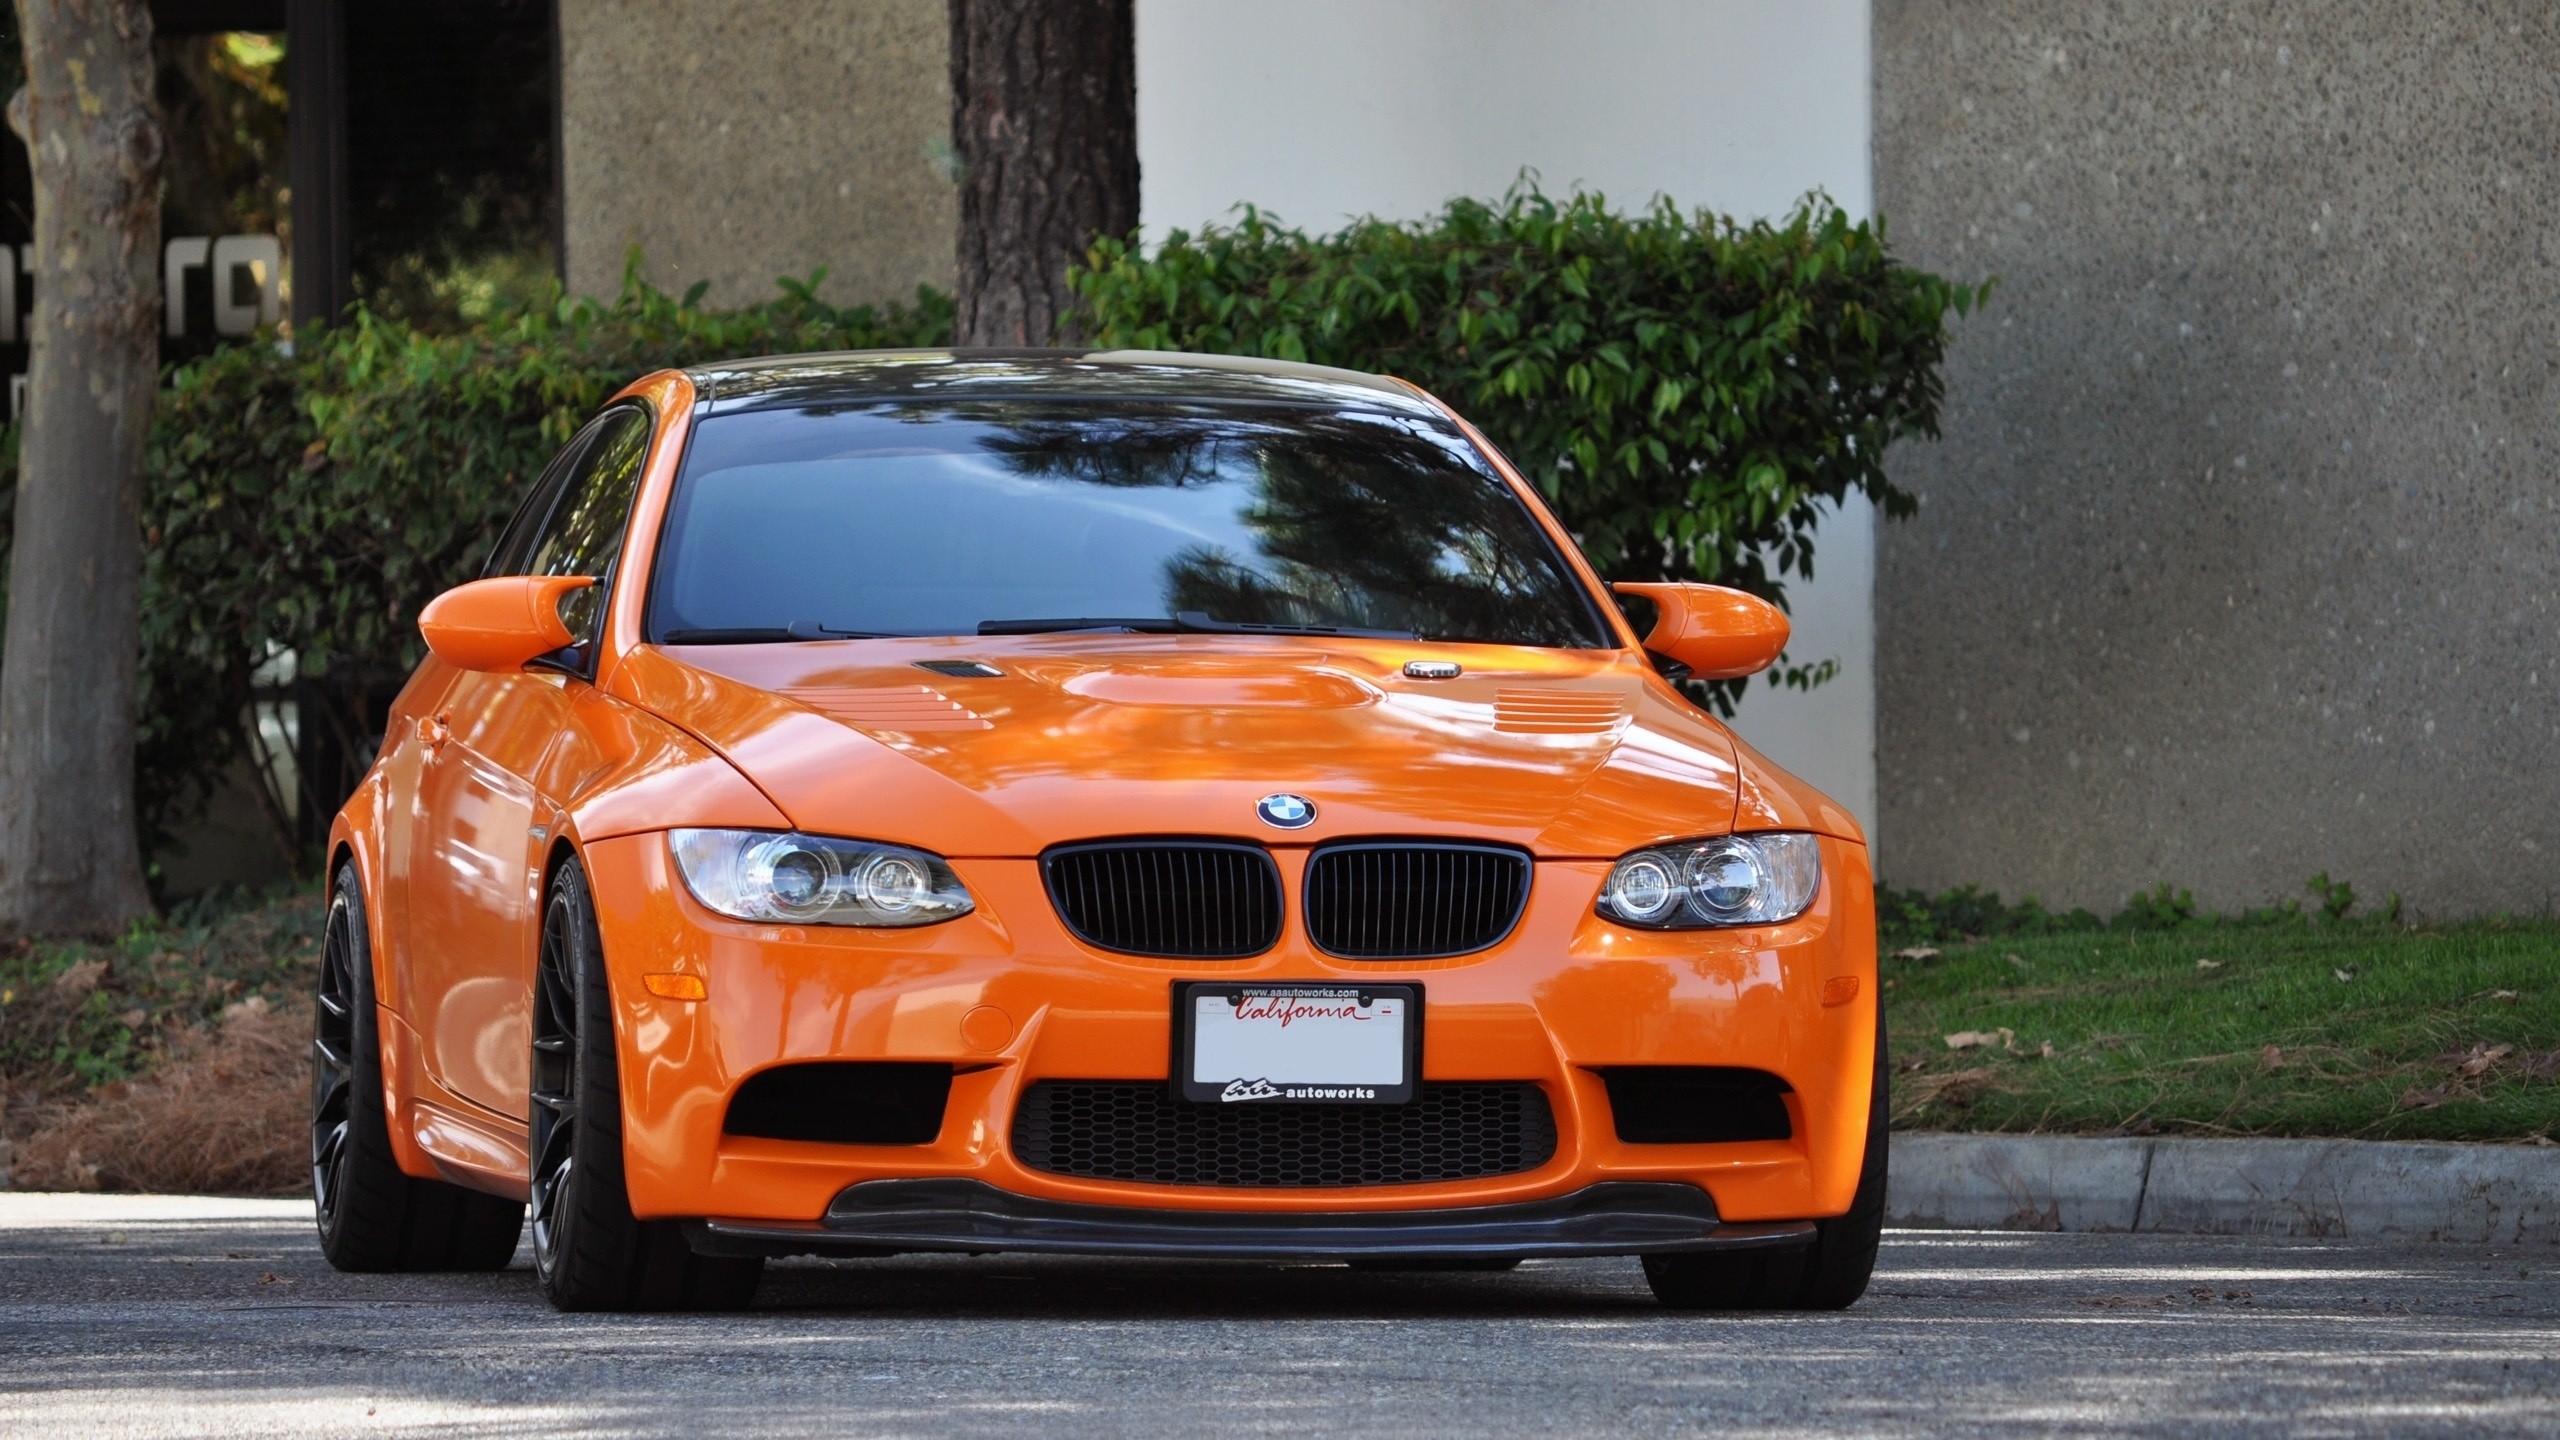 General 2560x1440 car BMW M3 GTS BMW E92 BMW 3 Series BMW orange cars vehicle